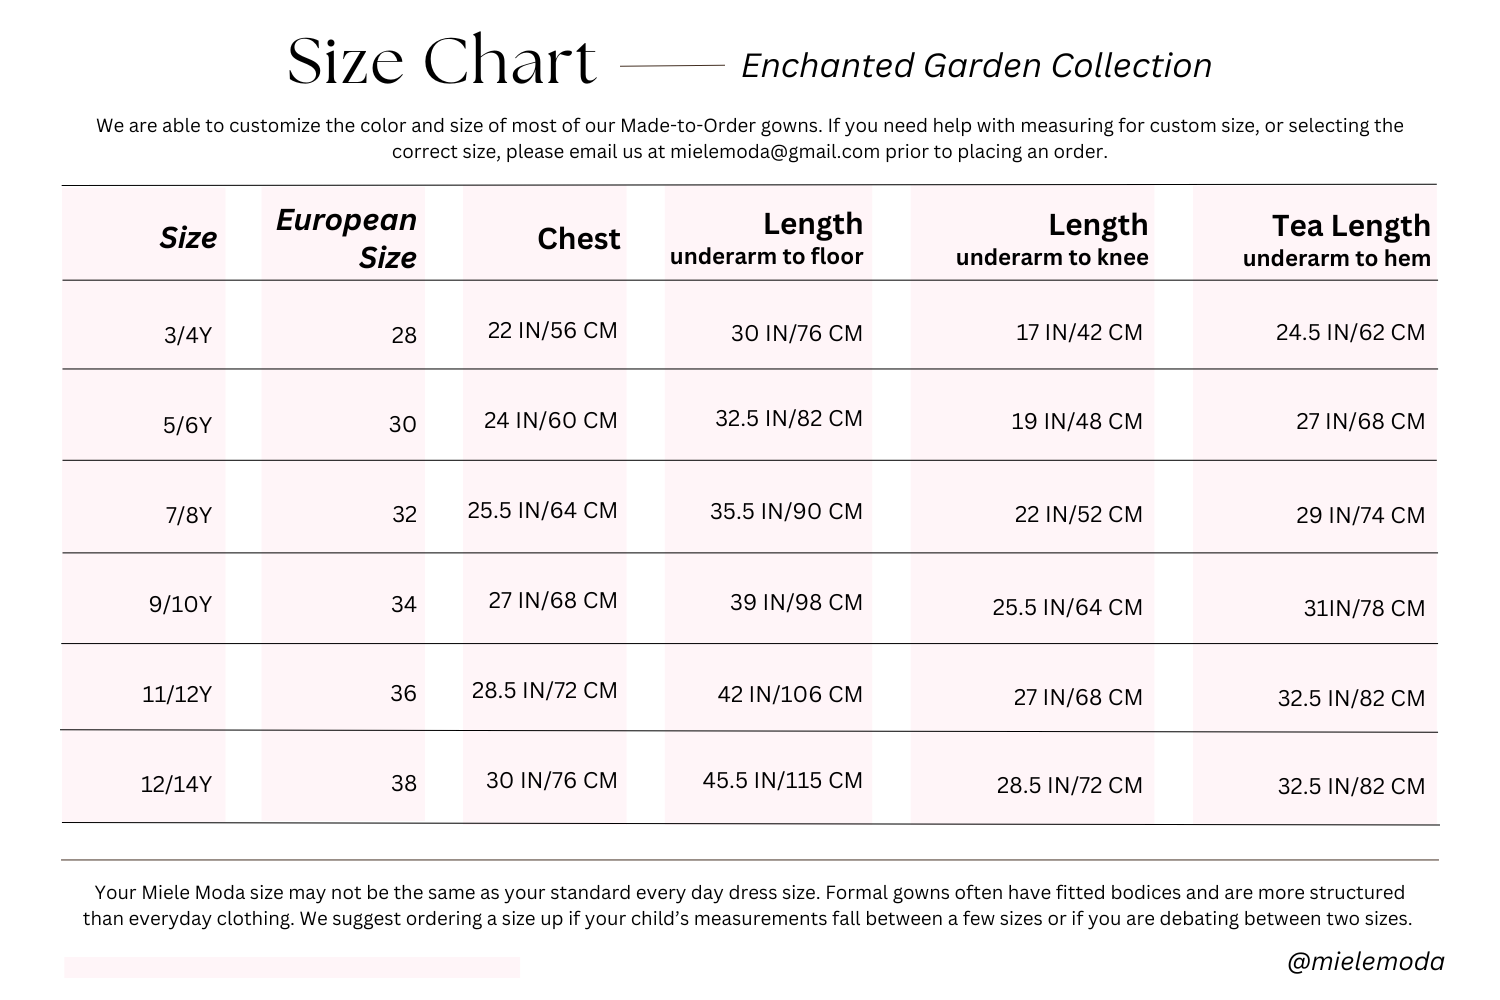 Enchanted Garden Size Chart Miele Moda Luxury Fashion